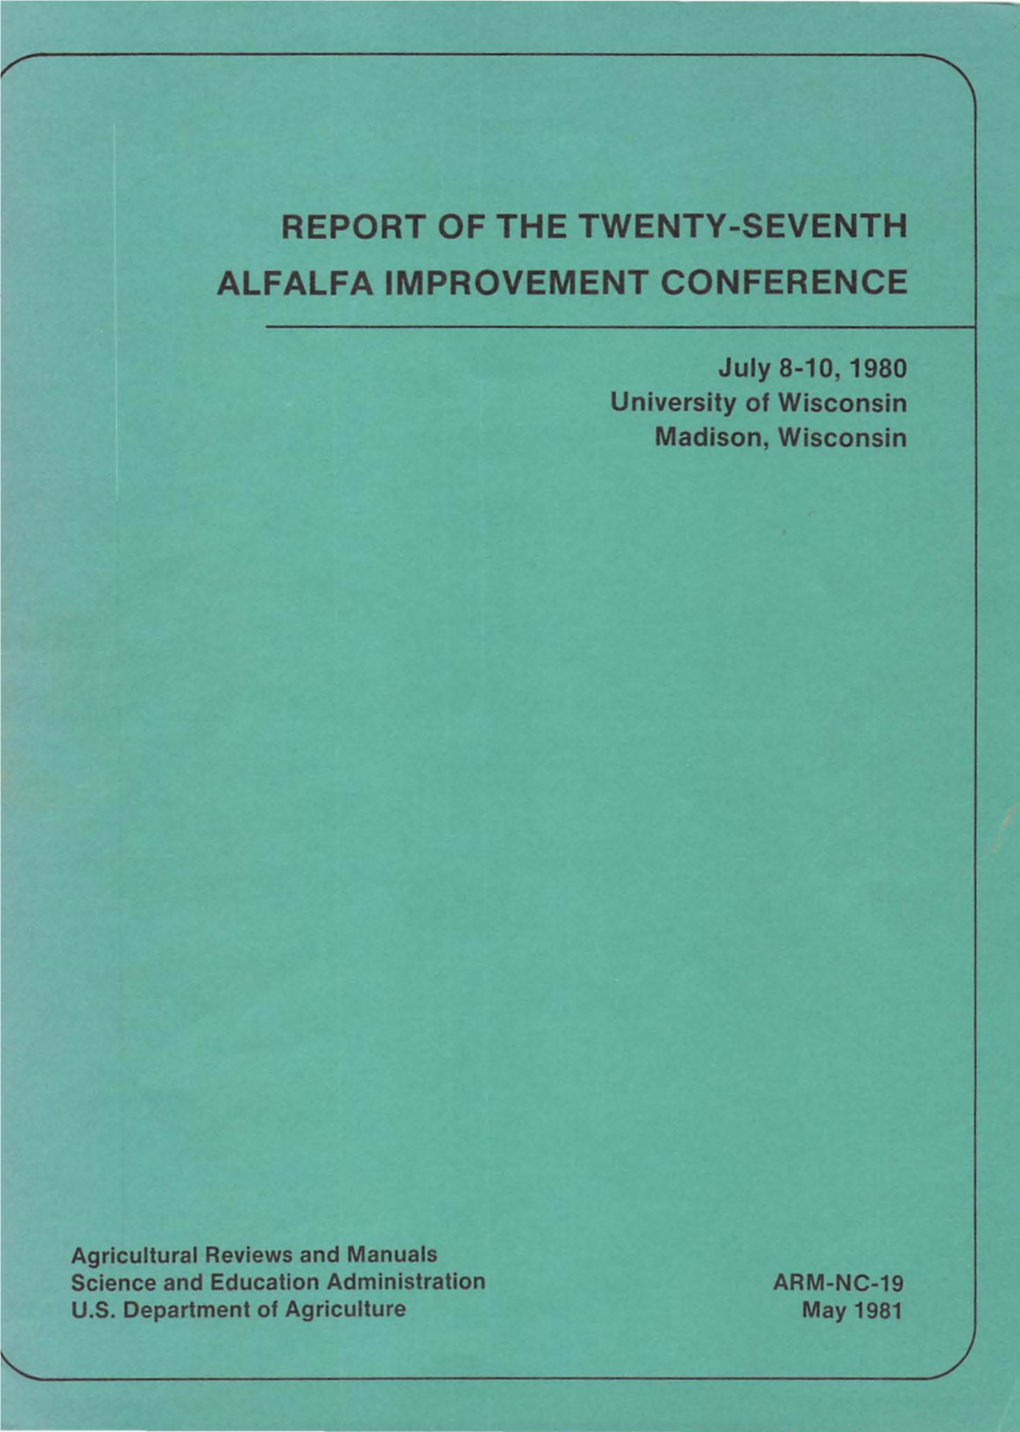 Report of the Twenty-Seventh Alfalfa Improvement Conference